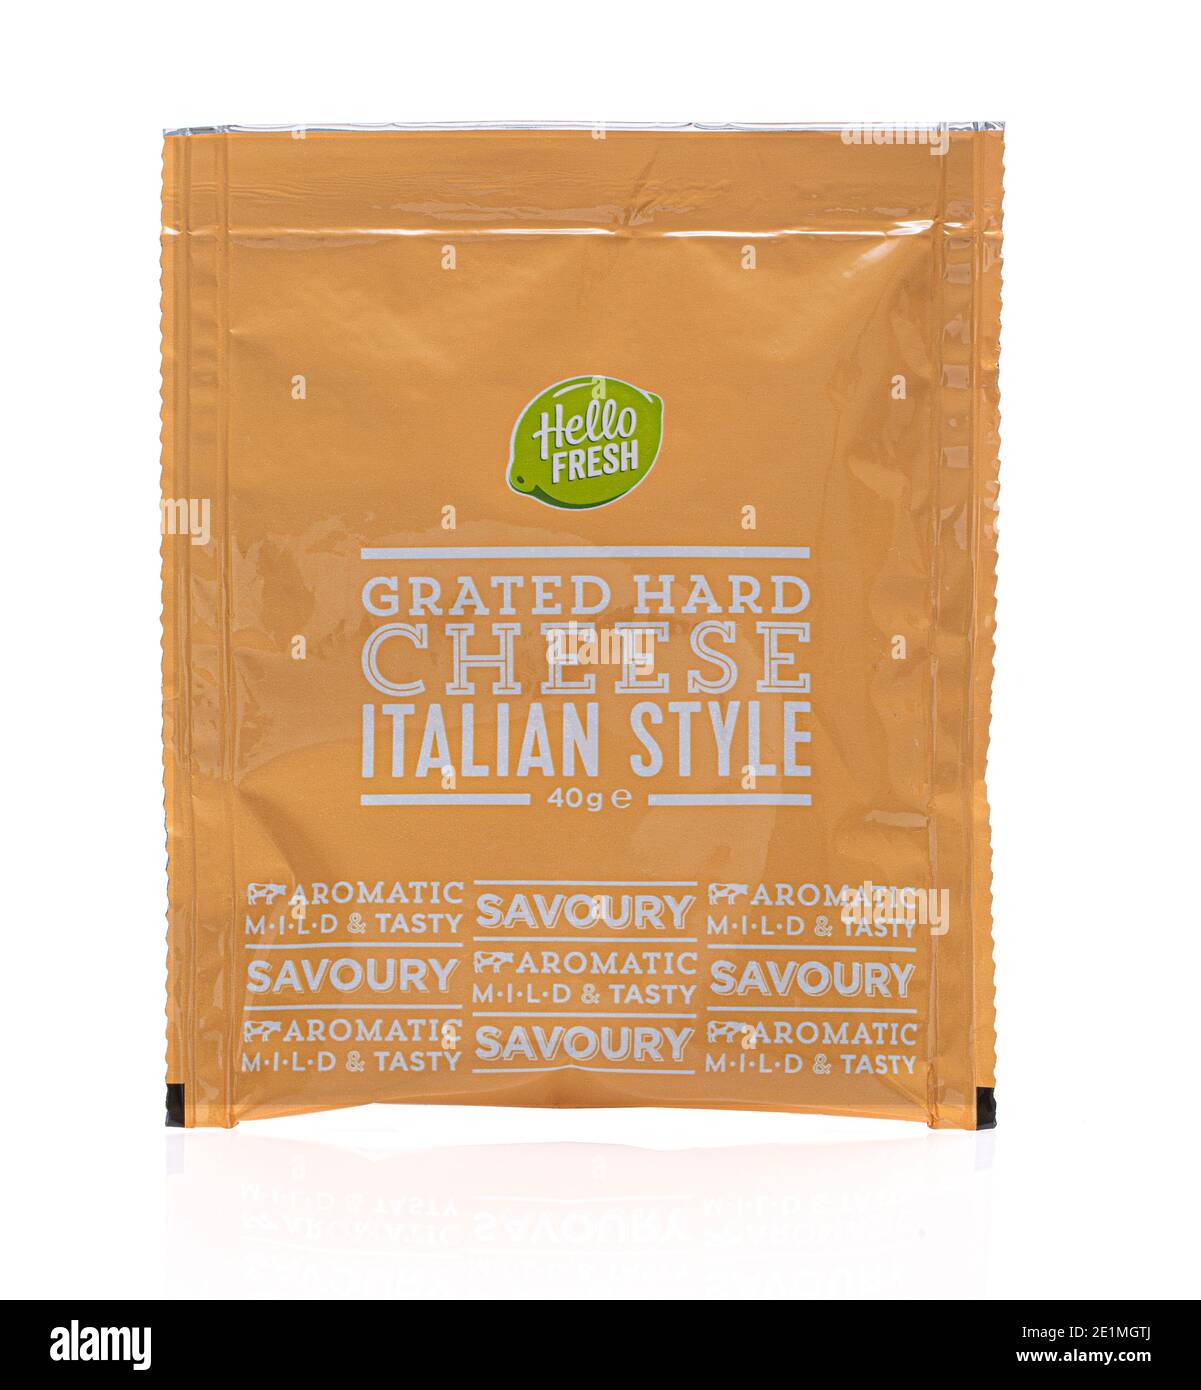 SWINDON, UK - JANUARY 8, 2021:  Packet of Hello Fresh Grated Hard Italian Style Cheese Stock Photo